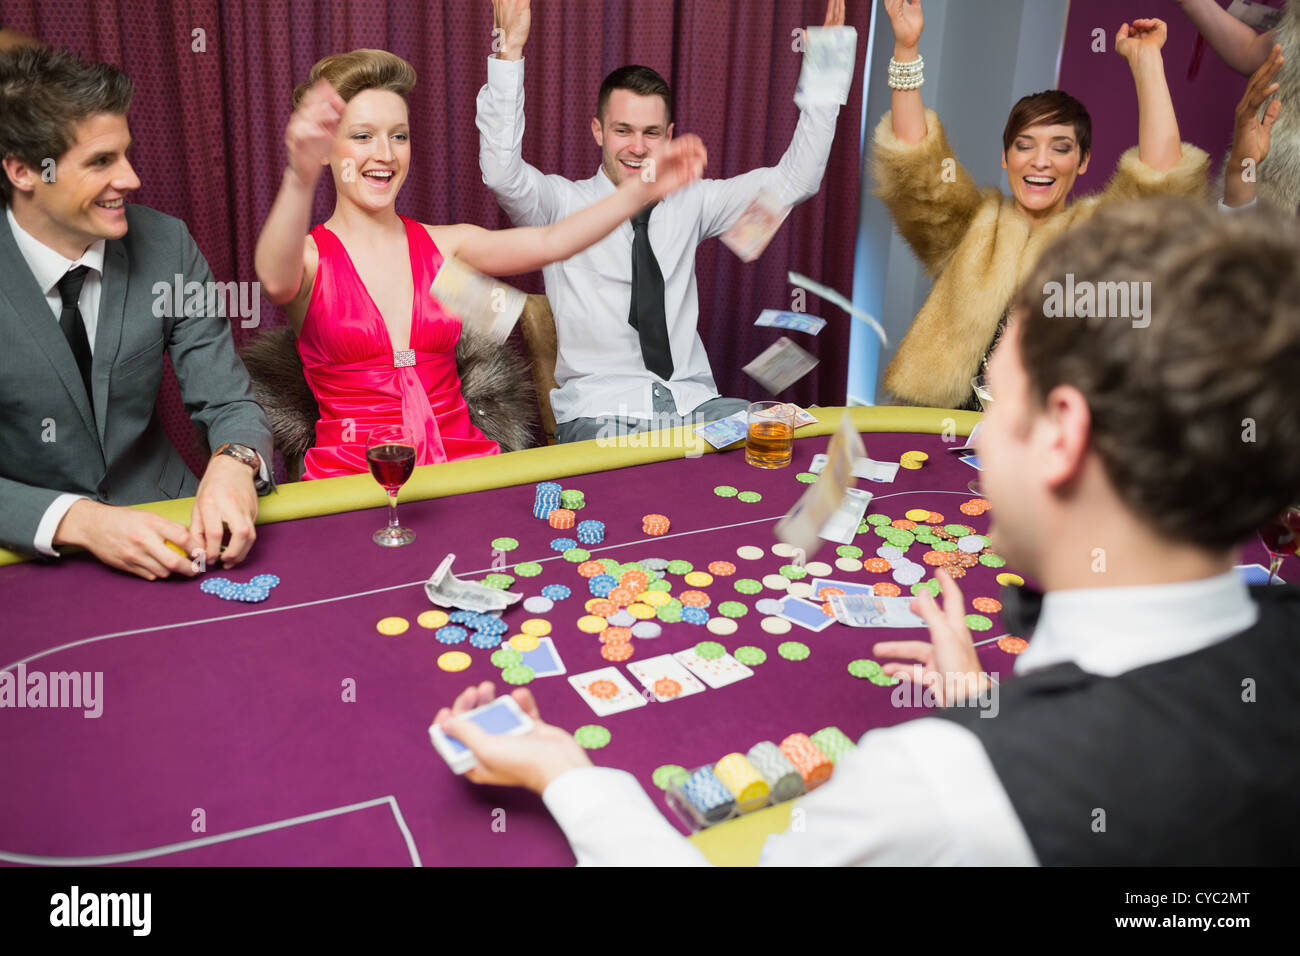 People celebrating at poker game Stock Photo